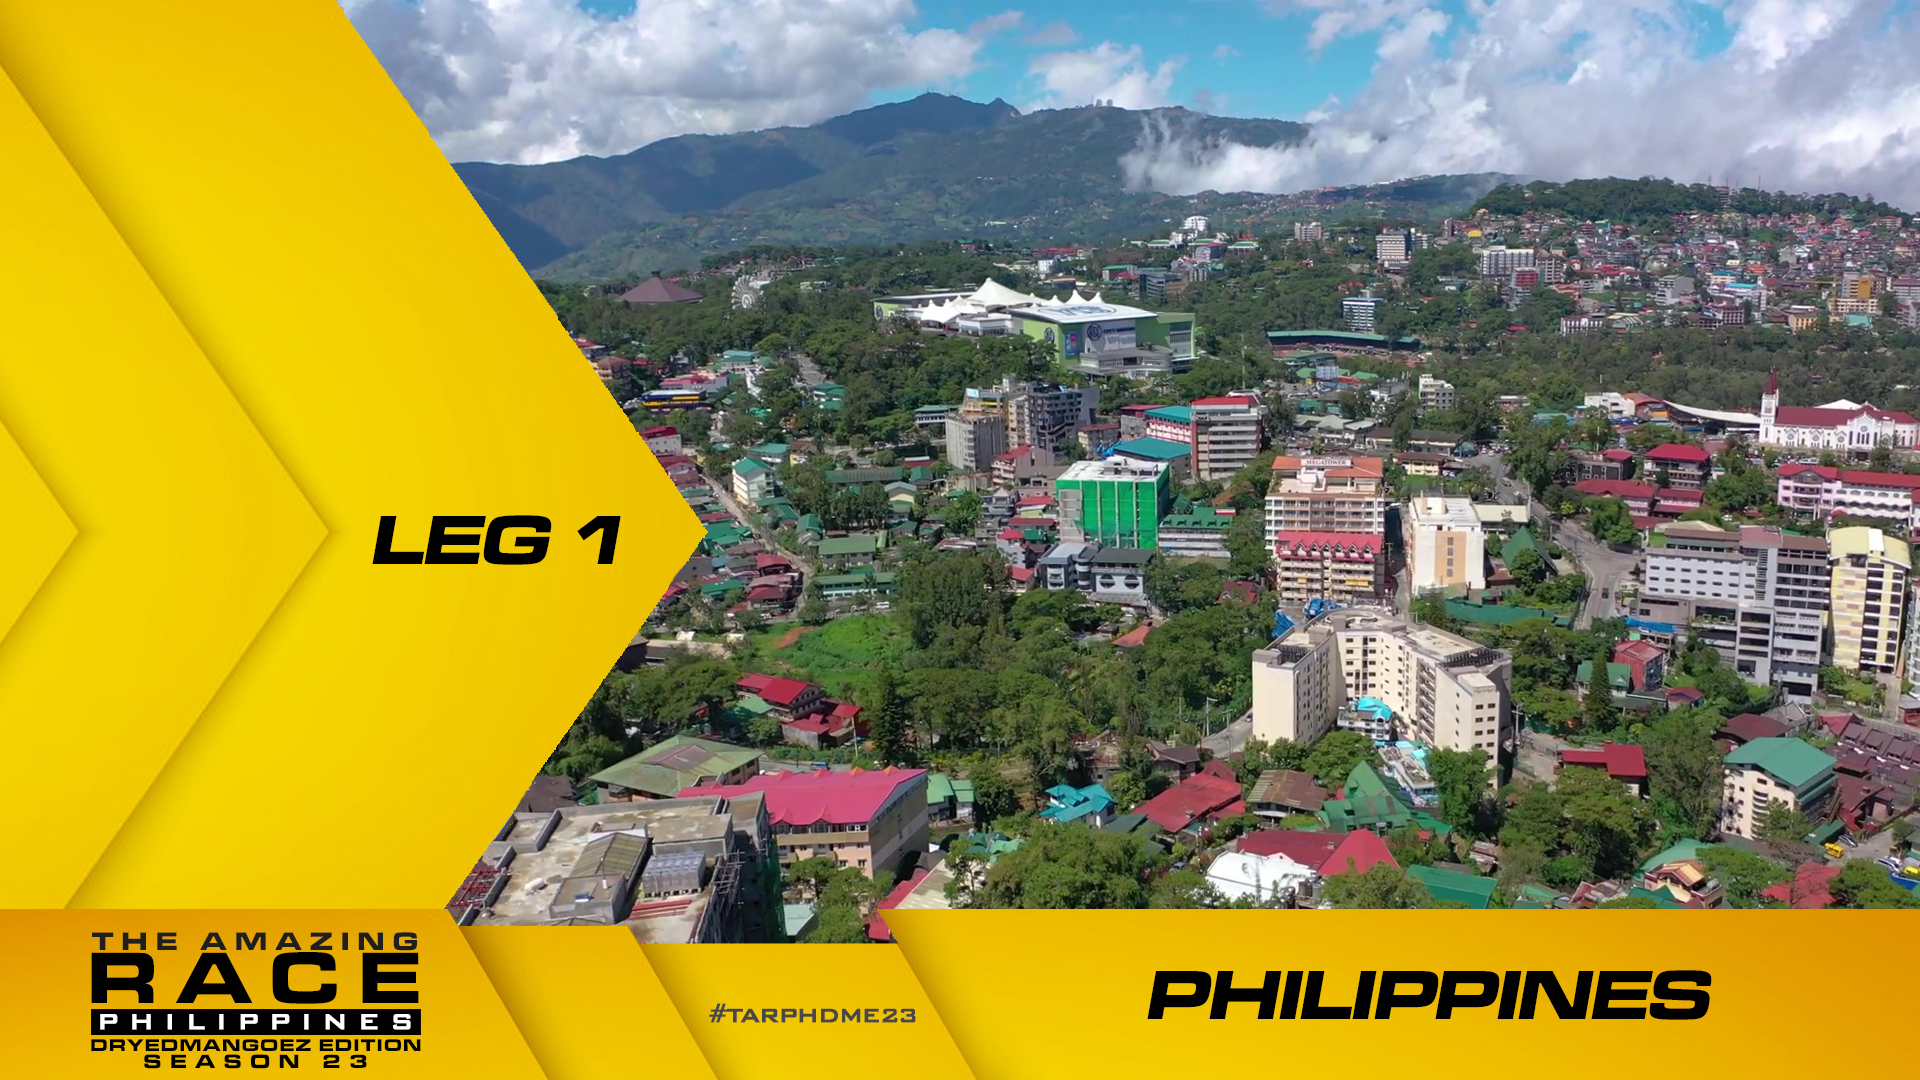 The Amazing Race Philippines: DryedMangoez Edition Season 23, Leg 1 – Philippines